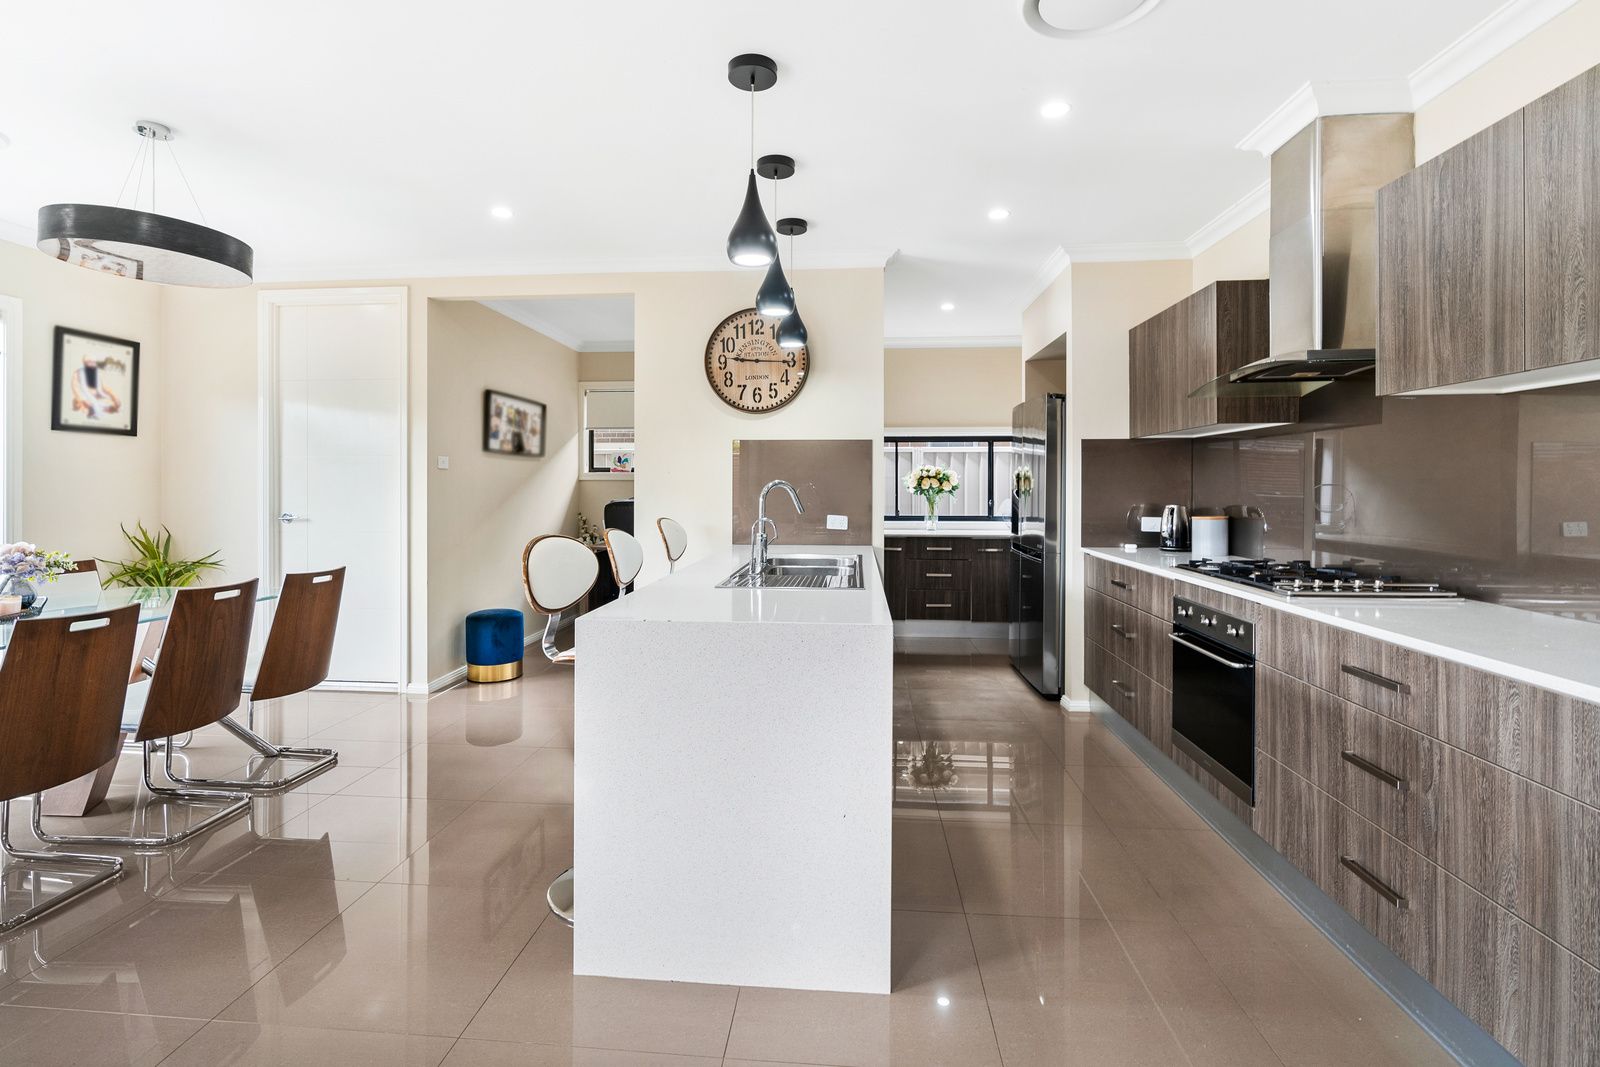 4 bedrooms House in 29 Abbott Street SPRING FARM NSW, 2570